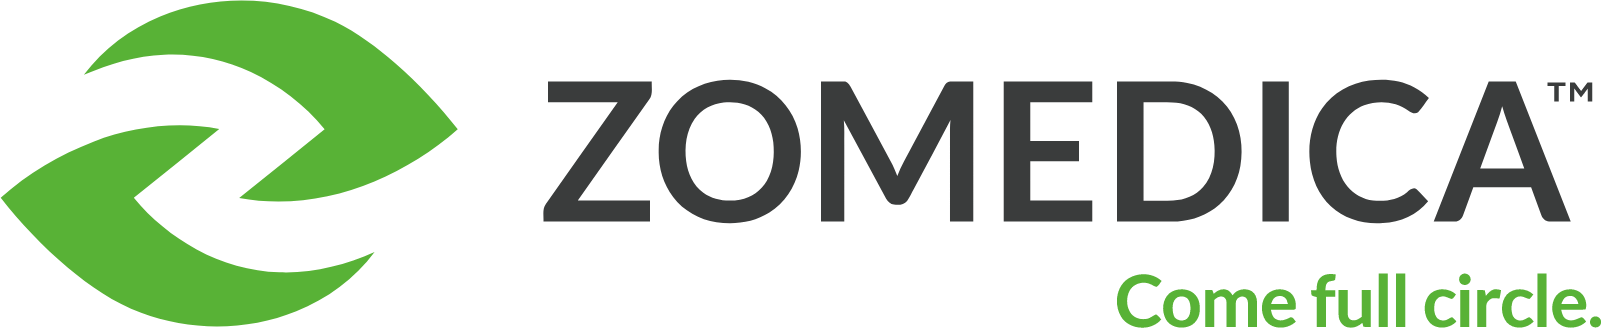 Zomedica Pharmaceuticals logo large (transparent PNG)